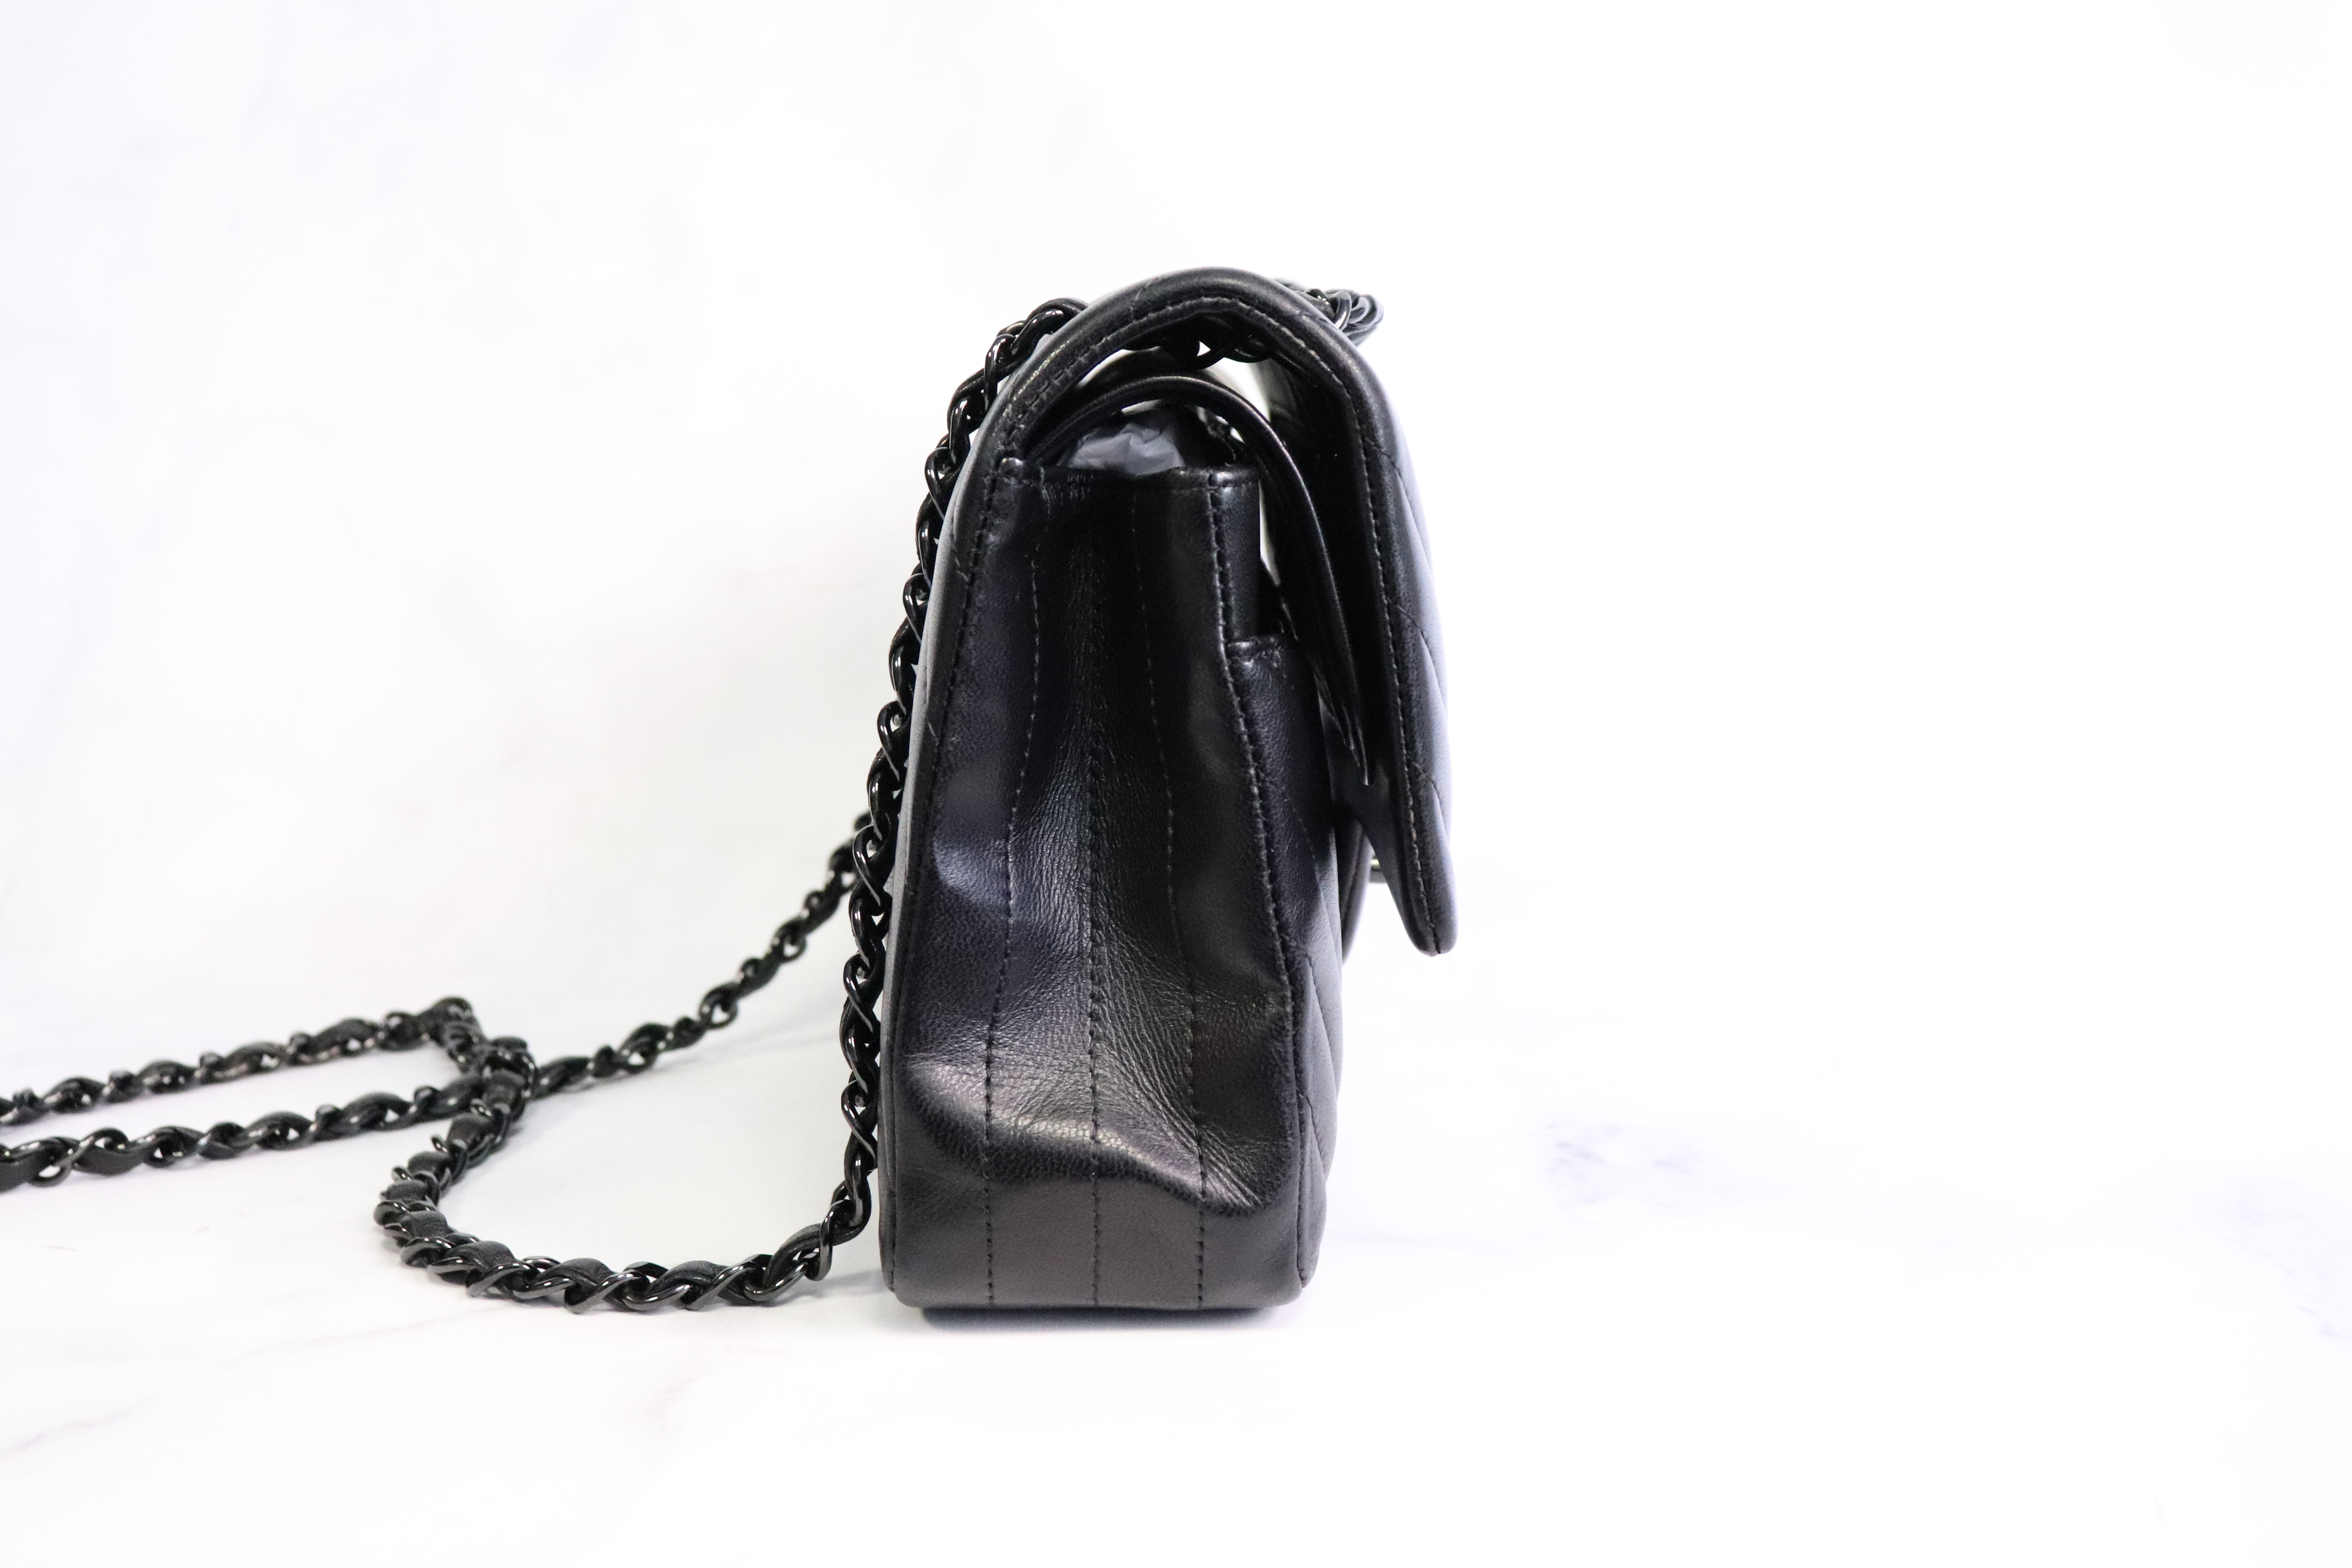 chanel all black classic flap bag